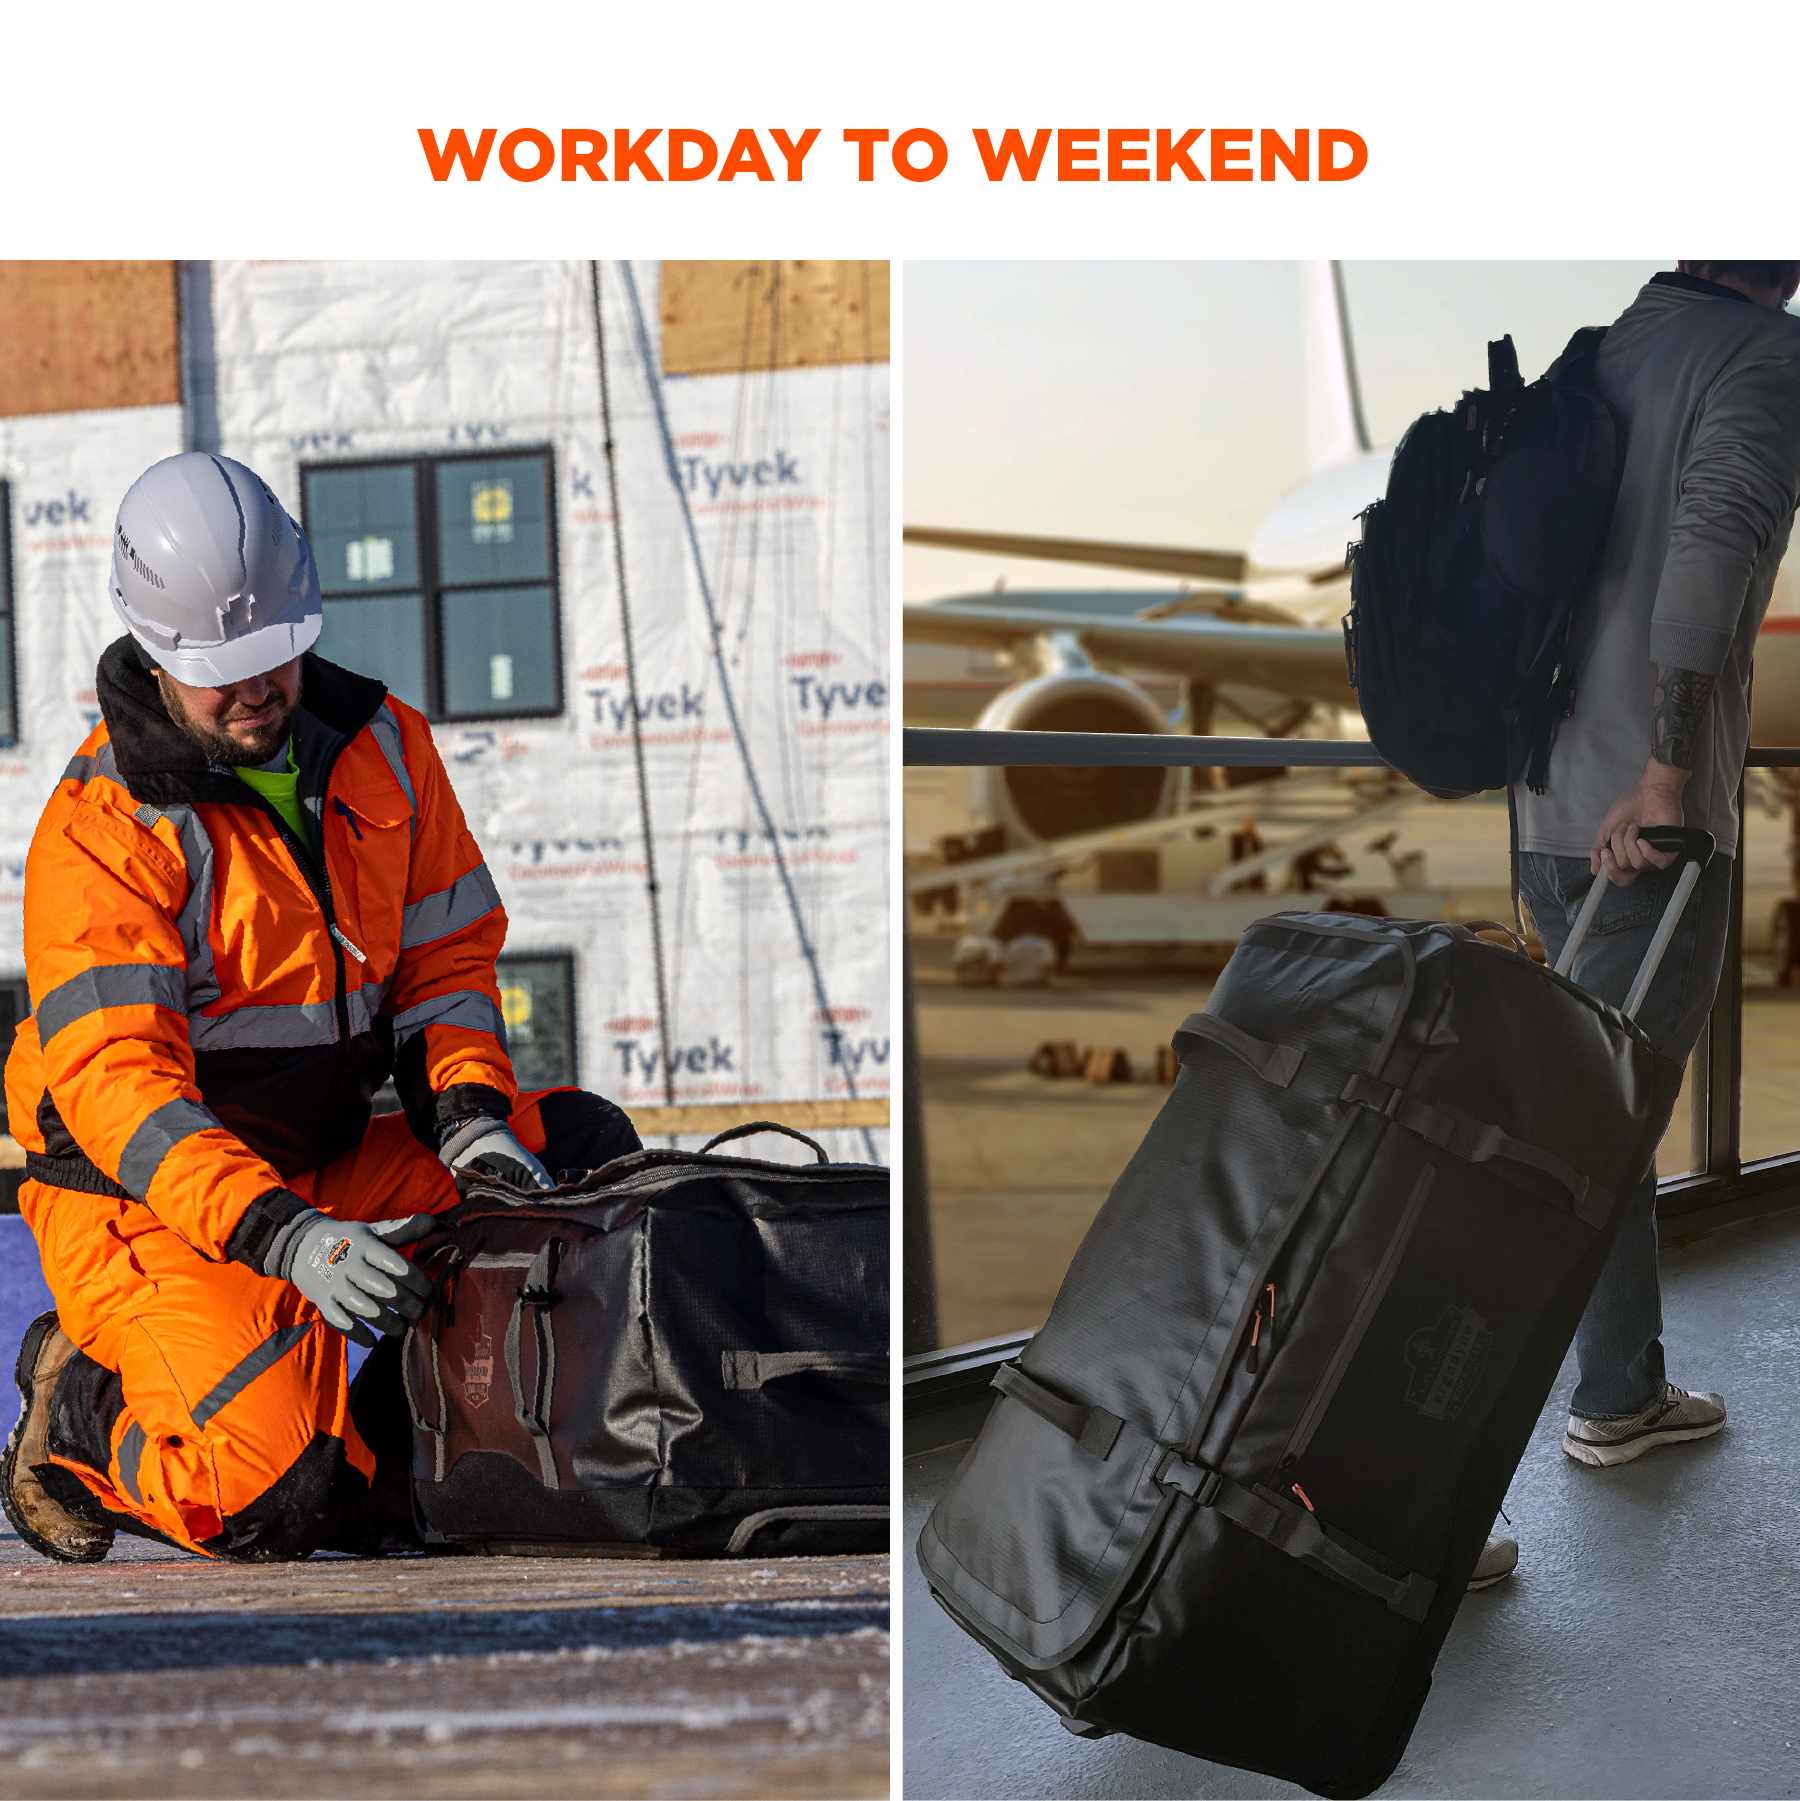 https://www.ergodyne.com/sites/default/files/product-images/13037-5032-water-resistant-wheeled-duffel-bag-black-workday-to-weekend.jpg